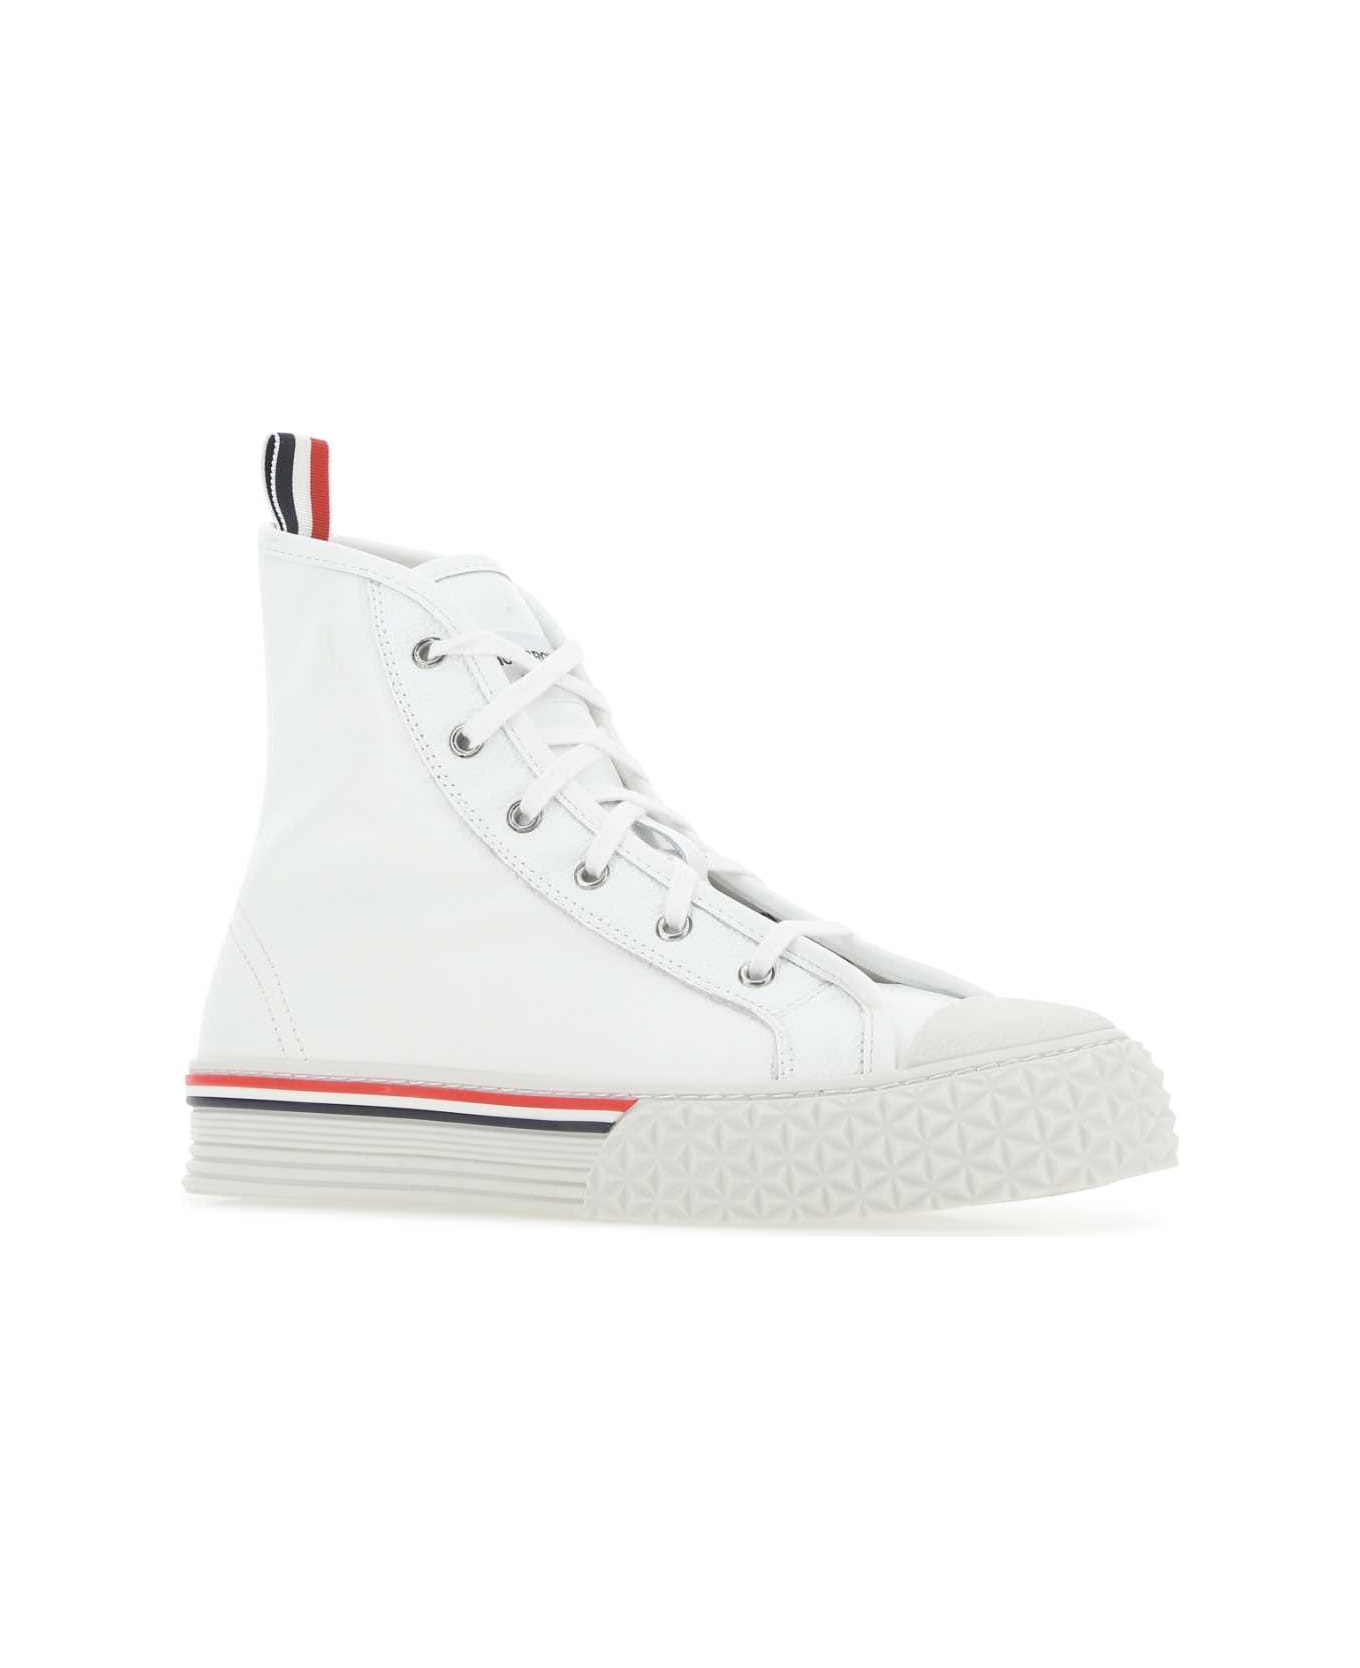 Thom Browne White Leather Collegiate Sneakers - 100